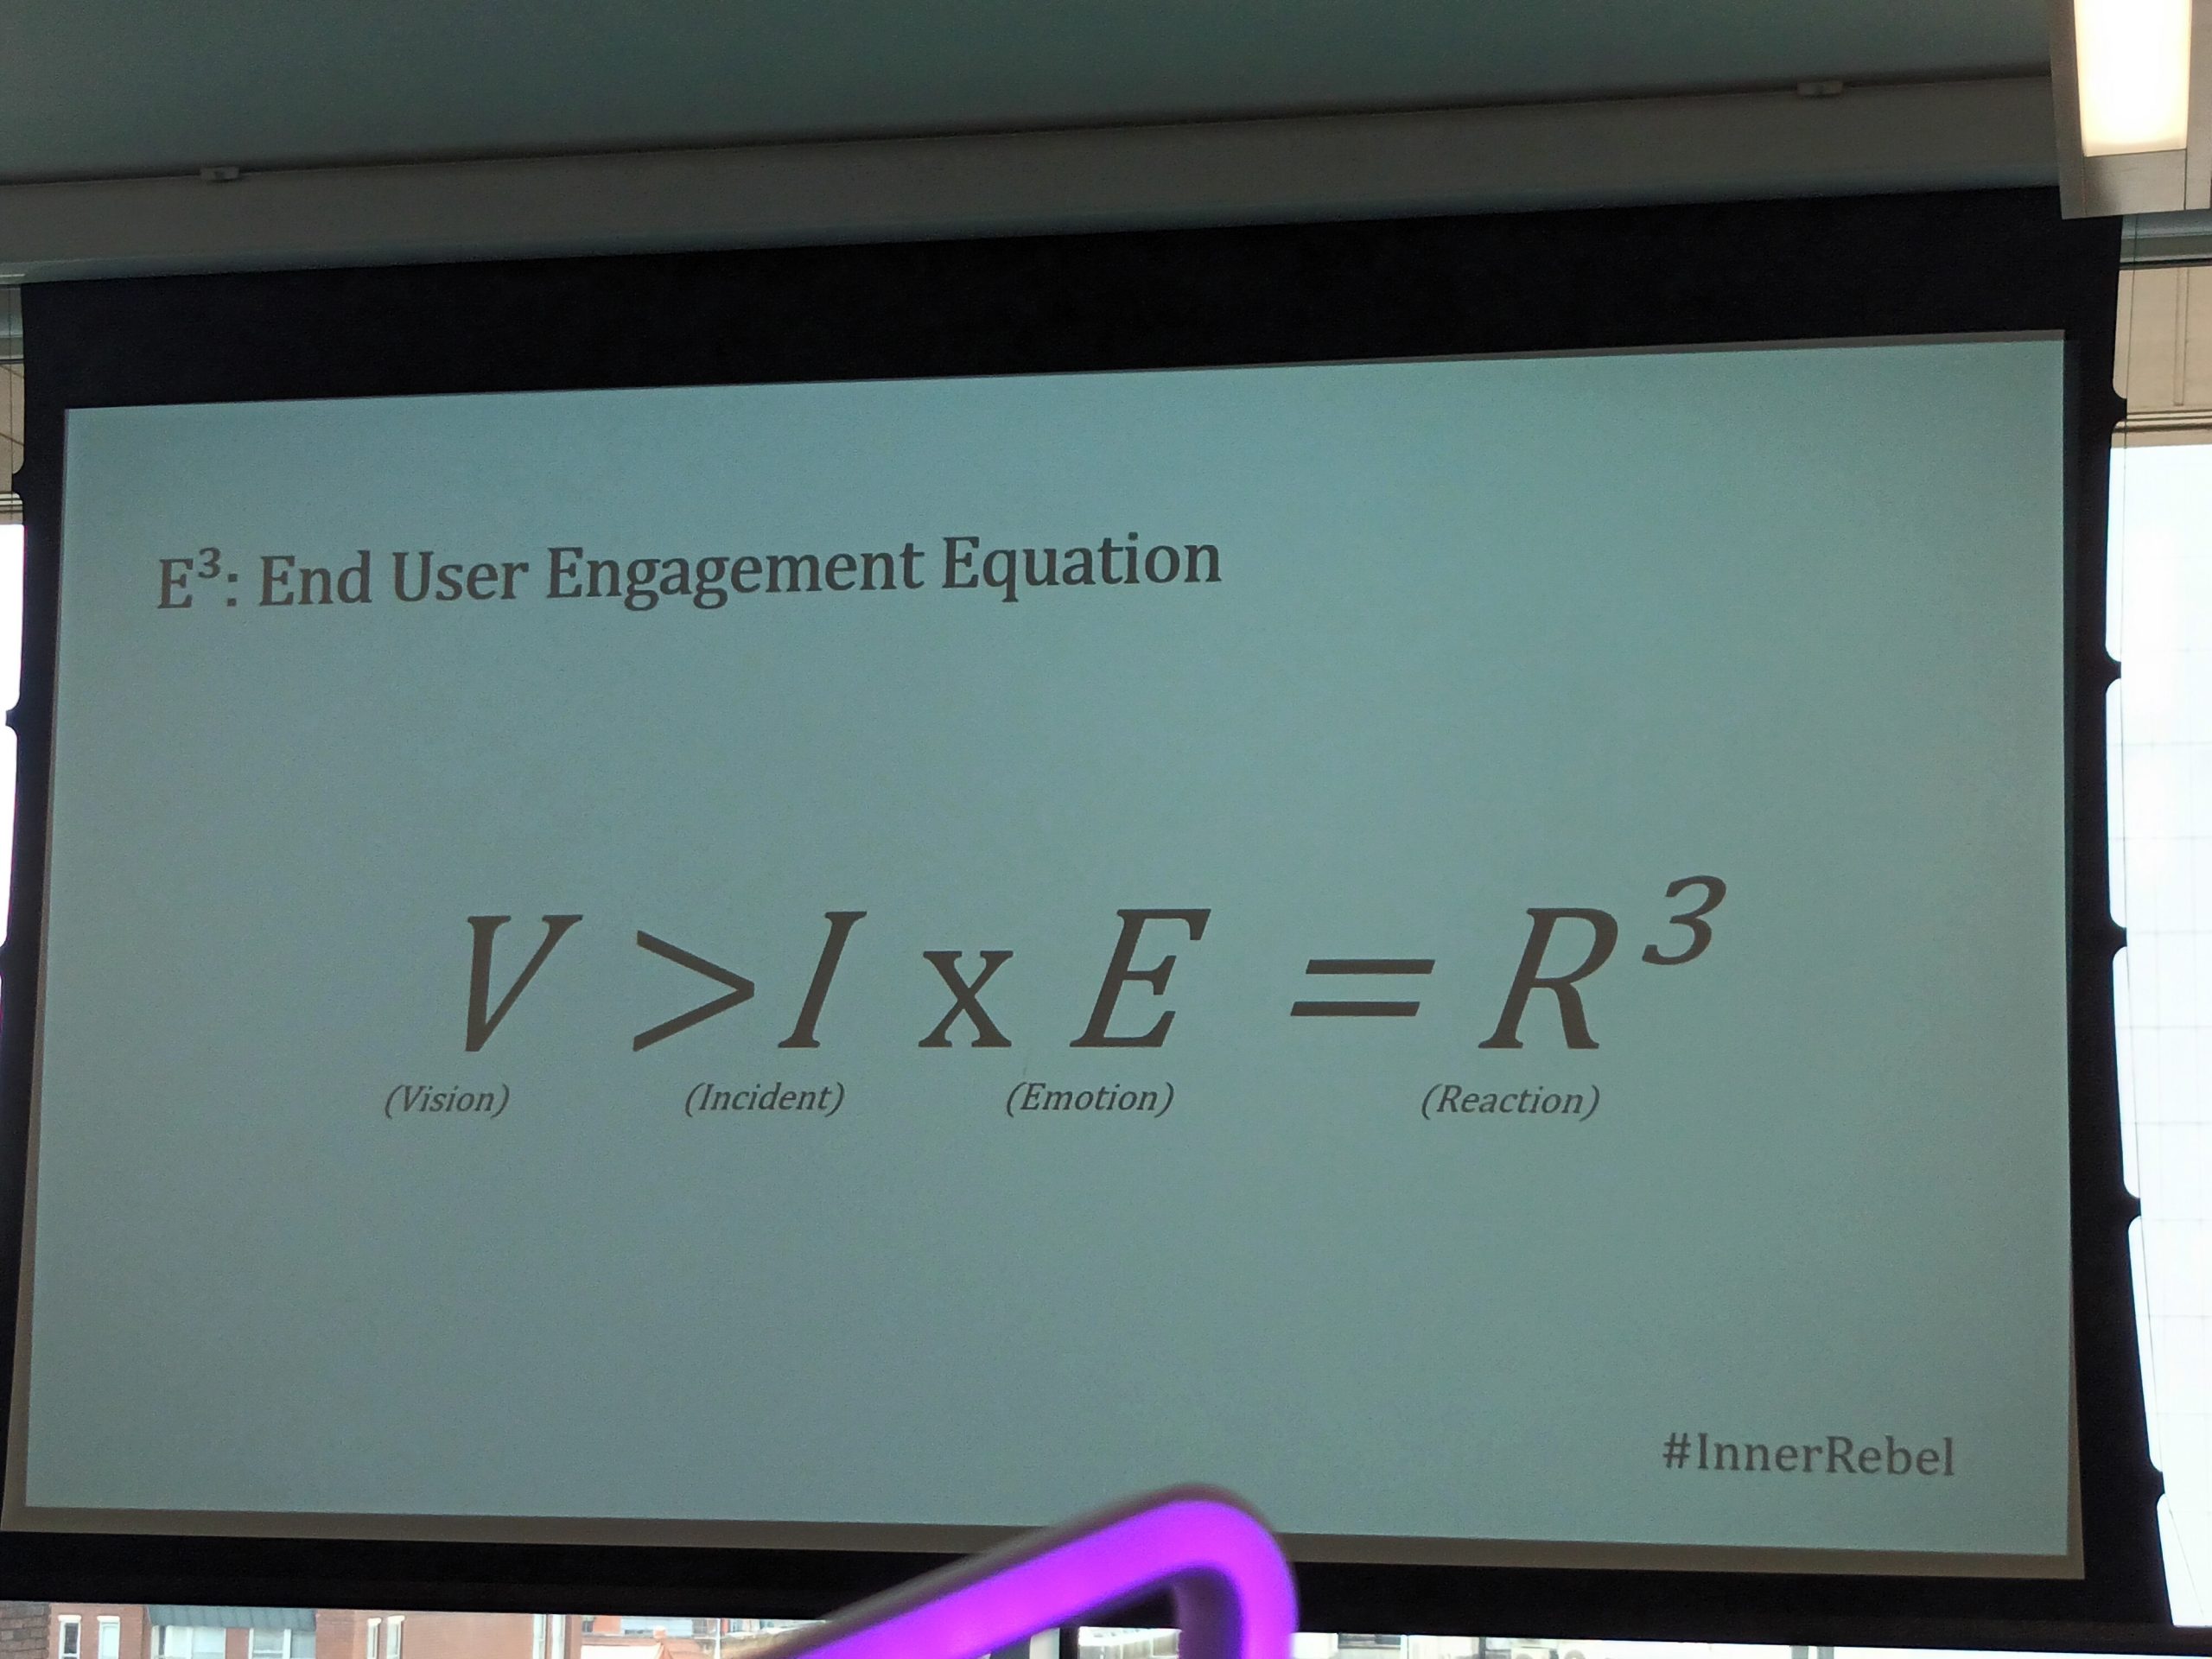 E3 end user engagement equation